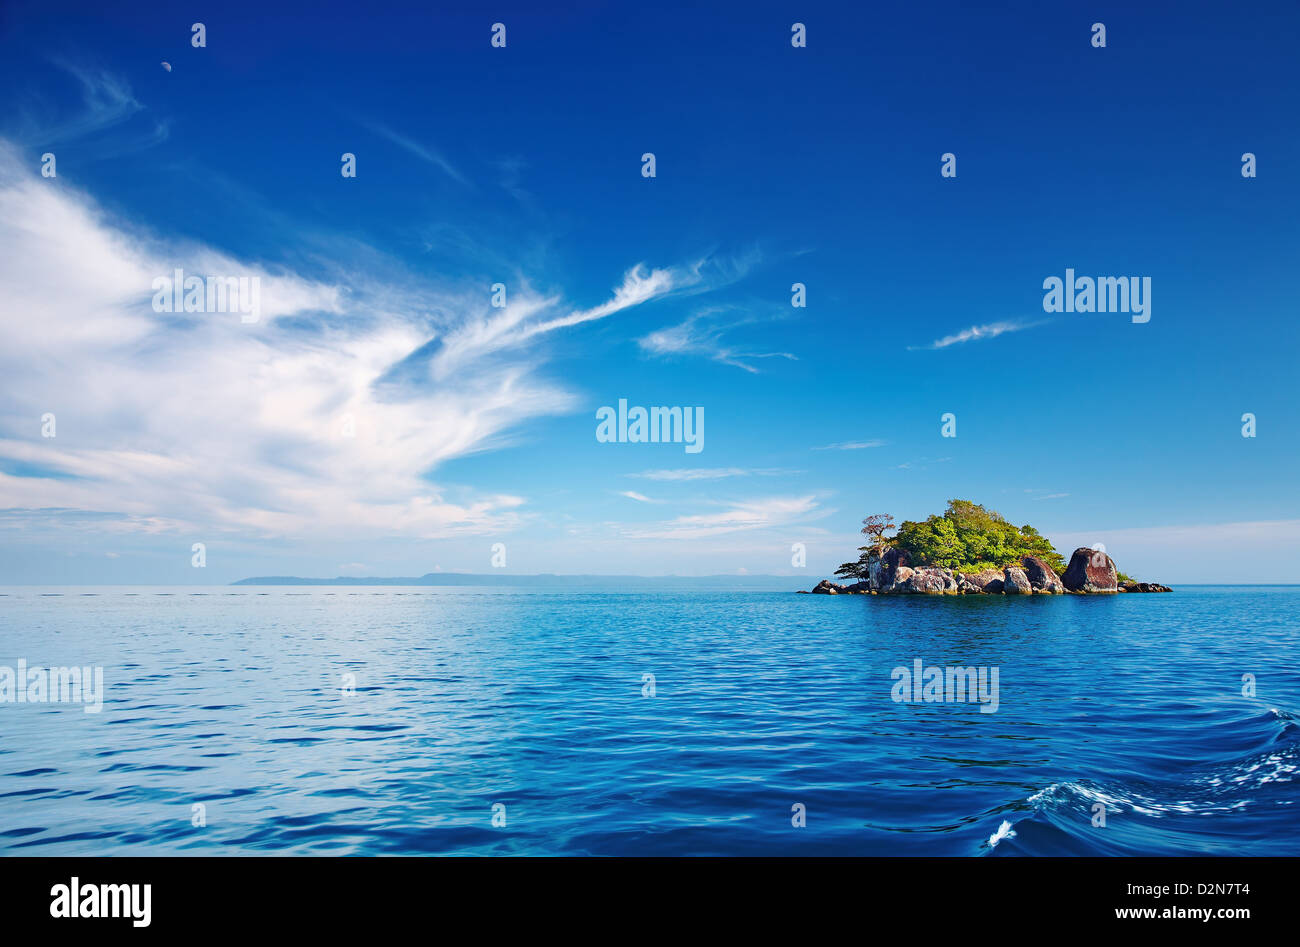 Seascape with small island, Trat archipelago, Thailand Stock Photo